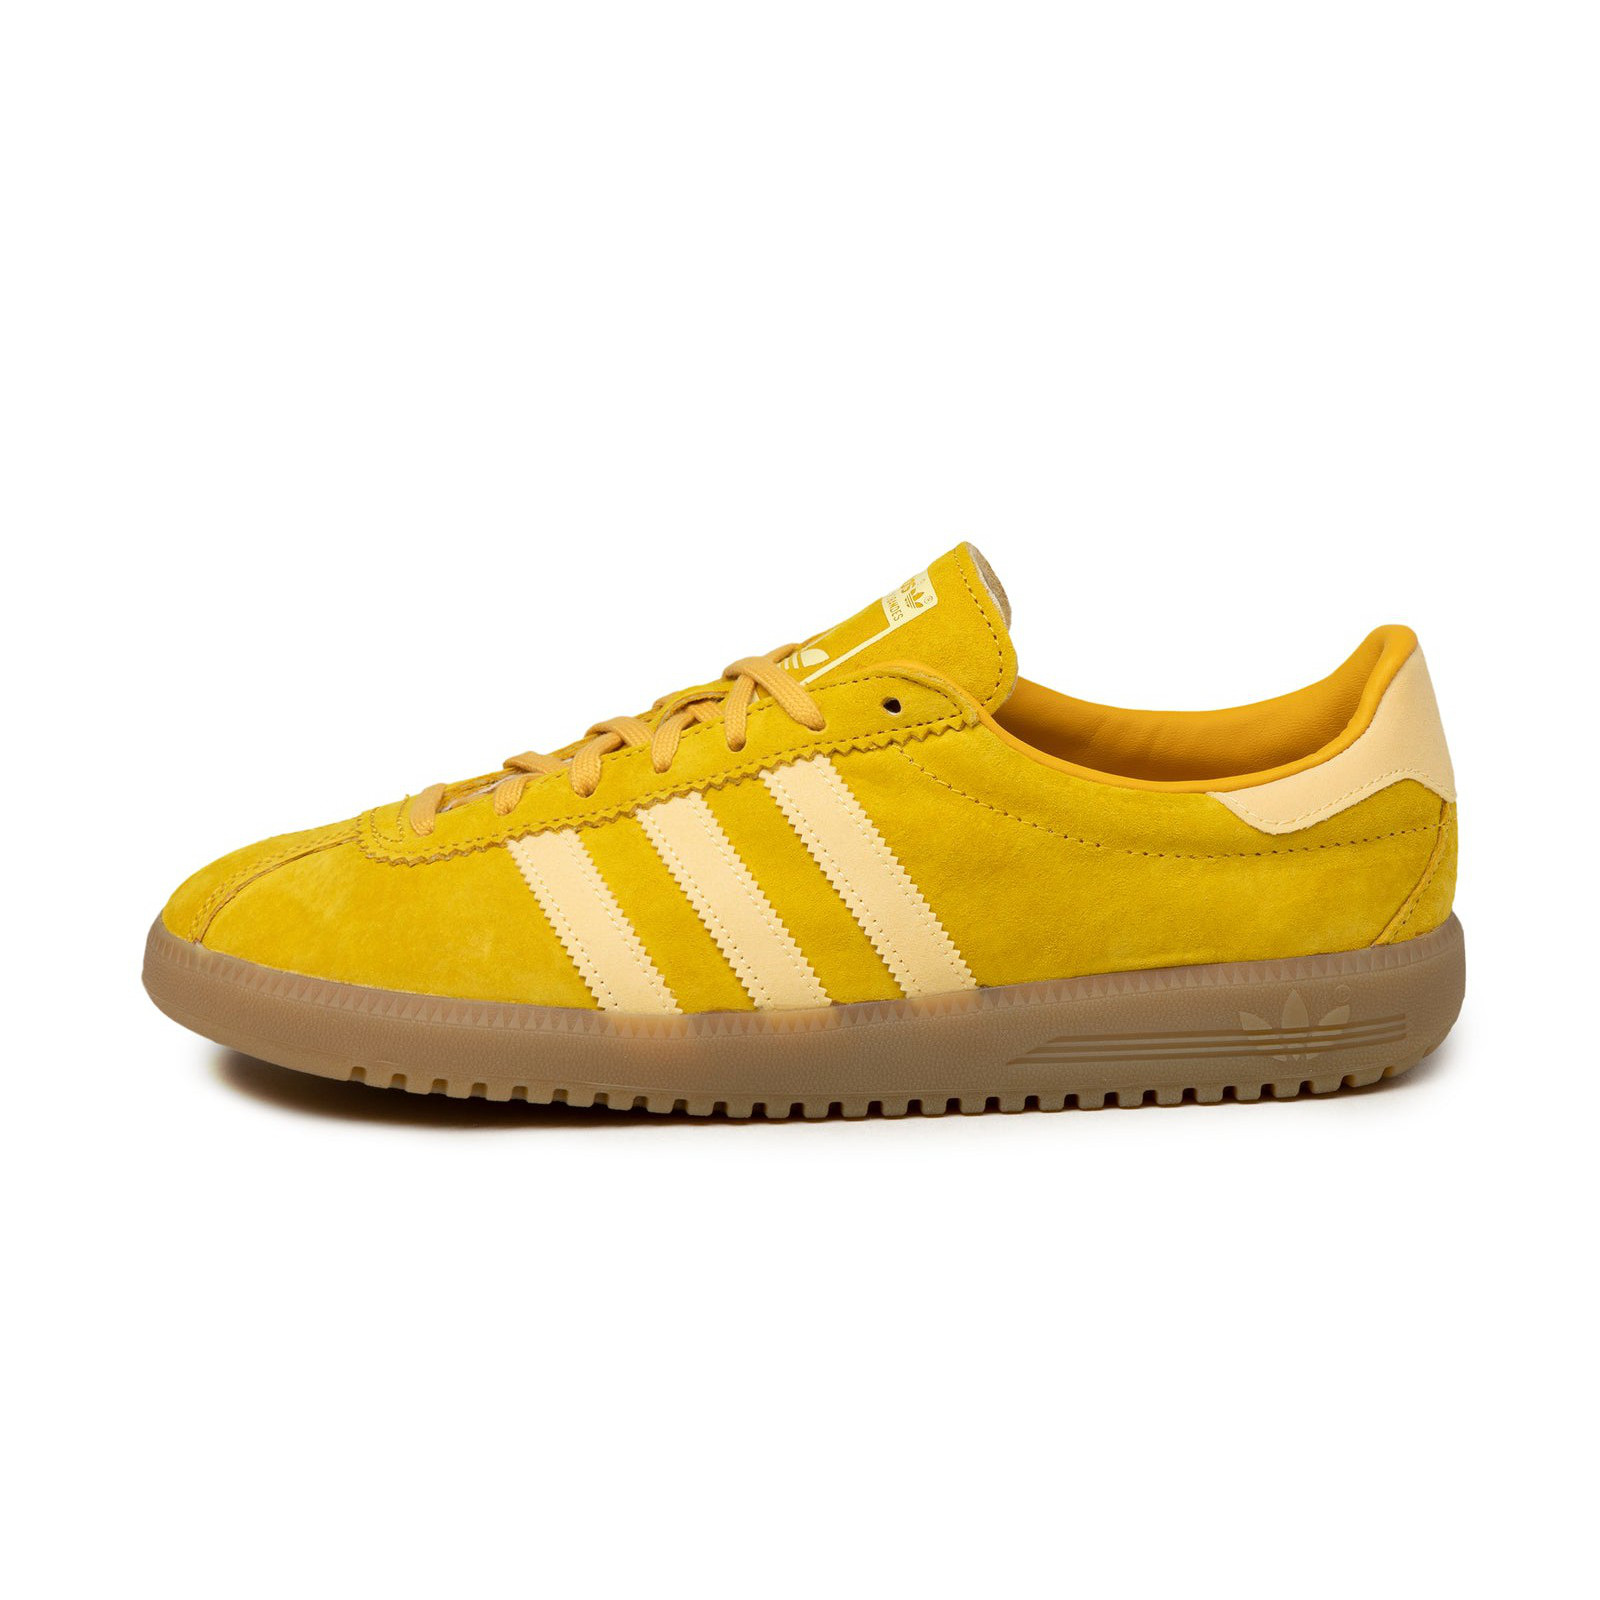 Adidas Bermuda
Bold Gold / Yellow